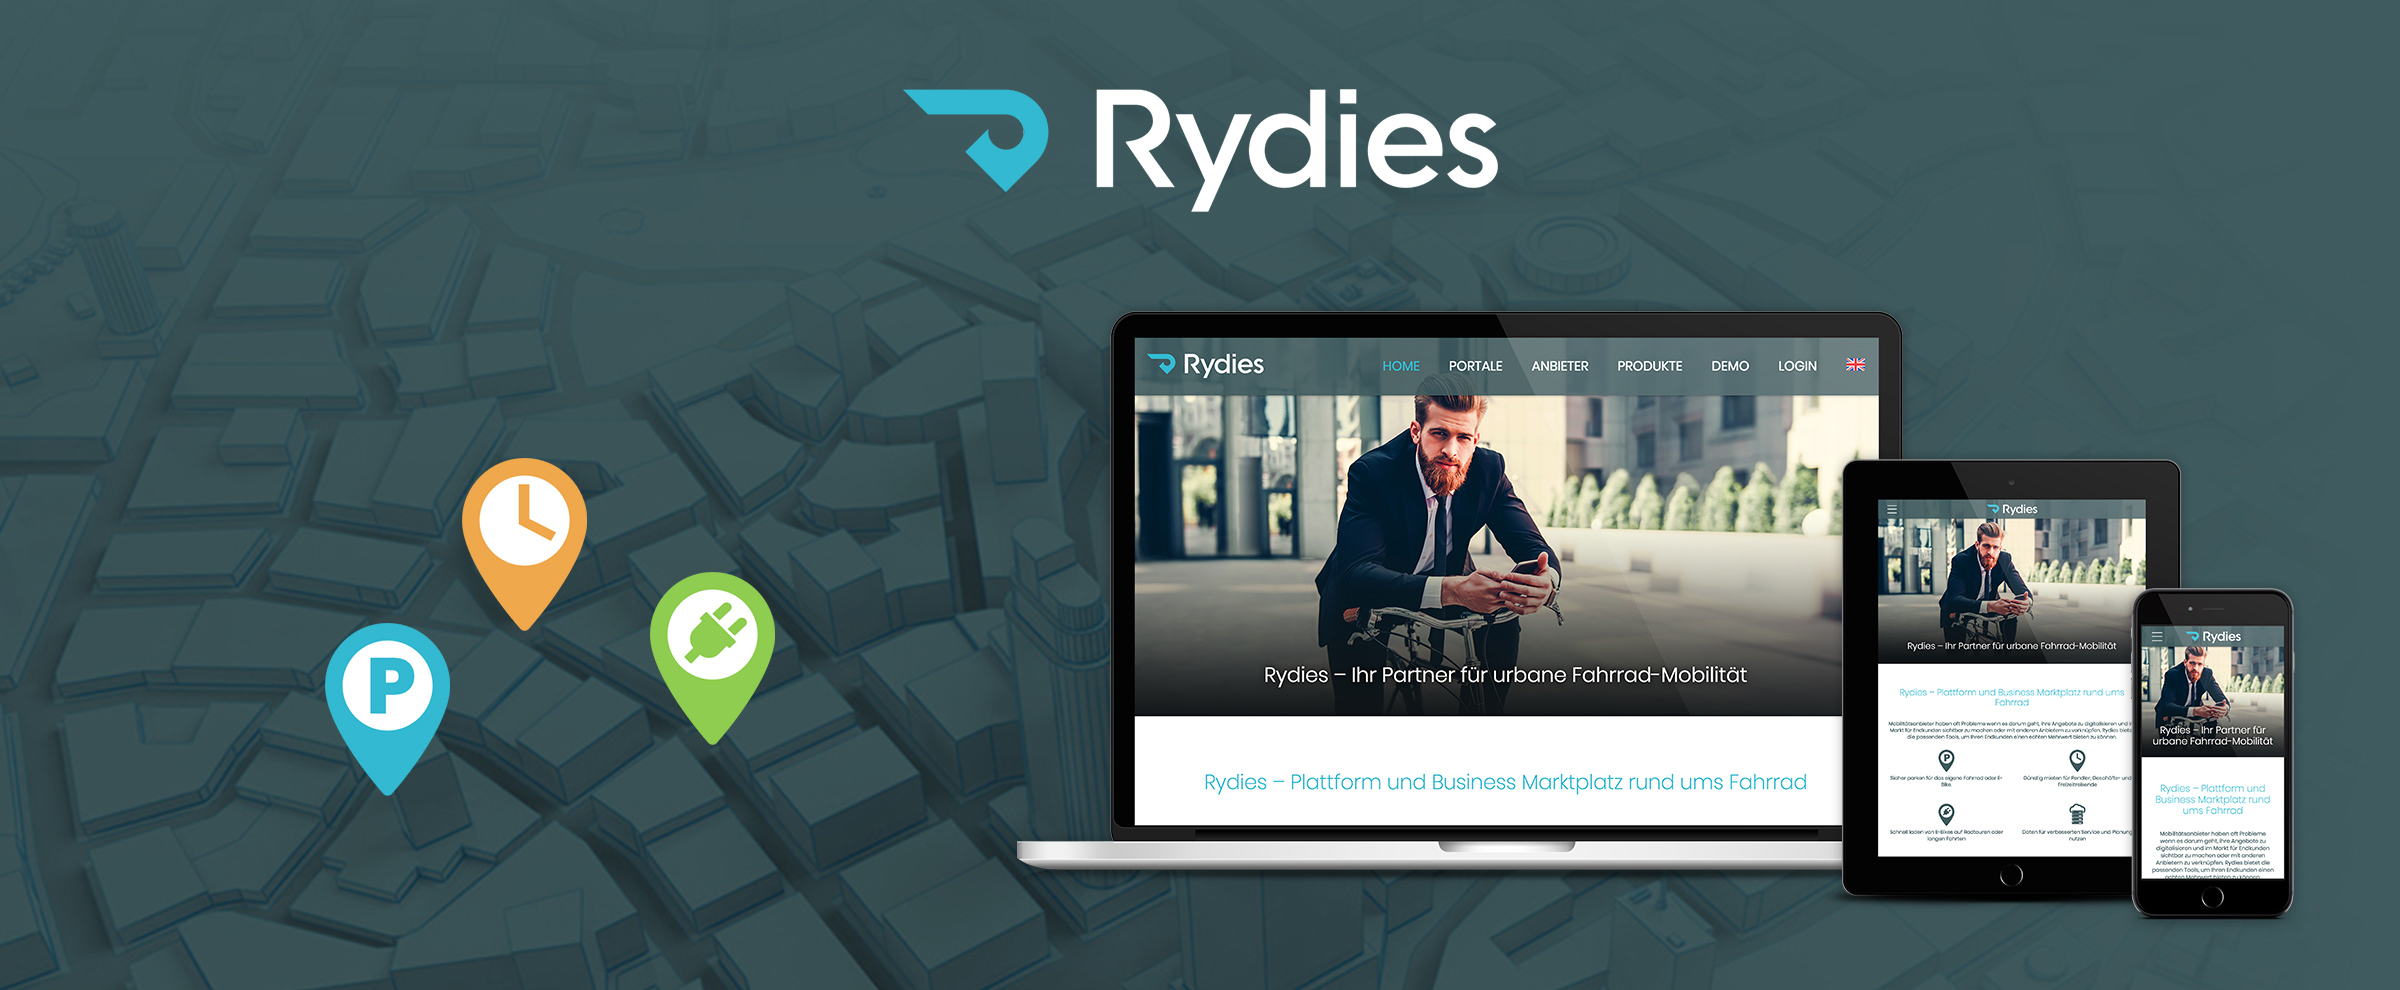 Rydies Website Relaunch